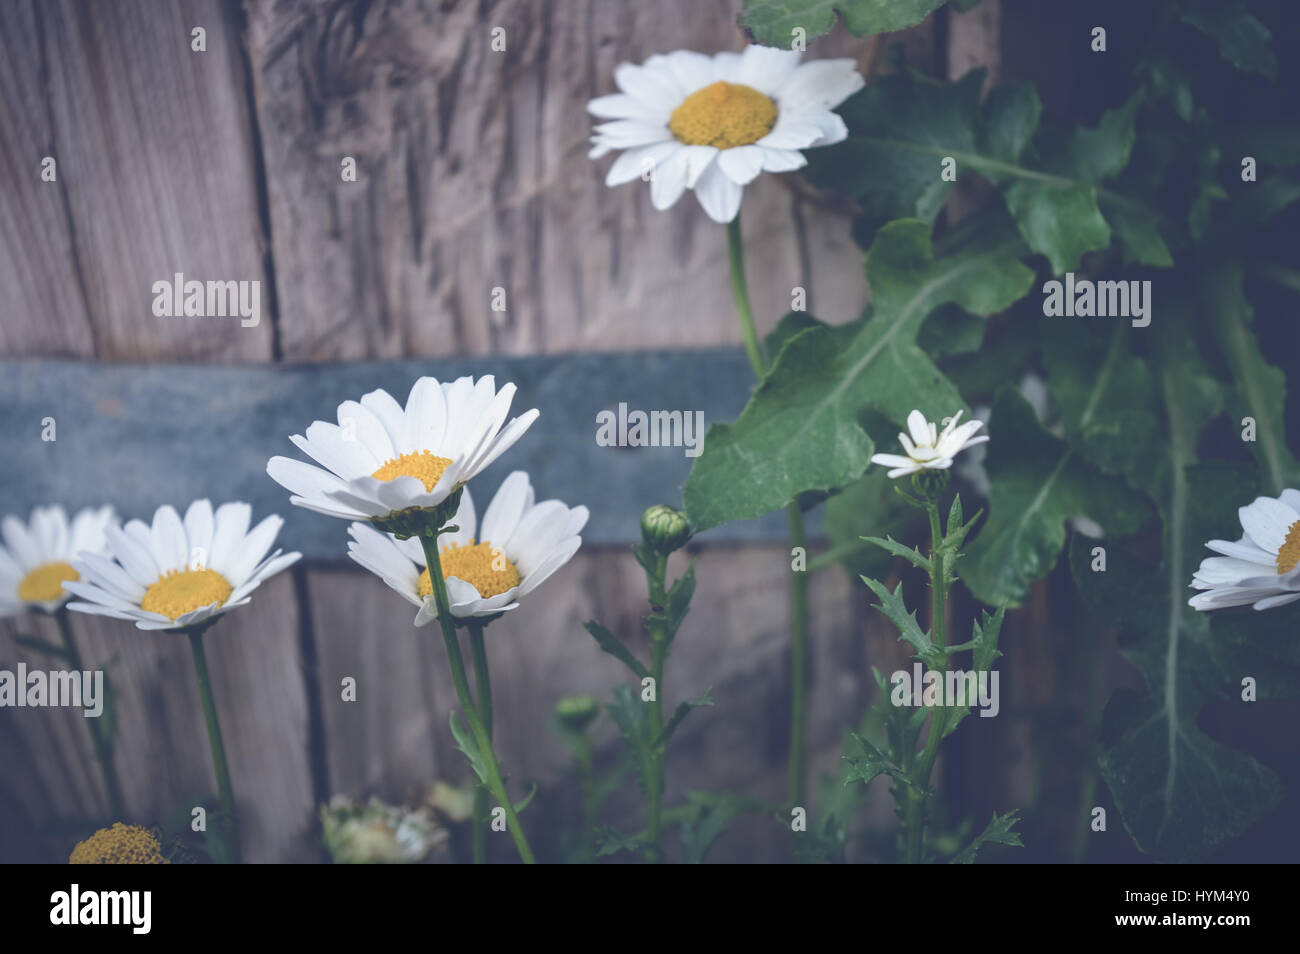 tanacetum parthenium, feverfew flowers with wooden background Stock Photo